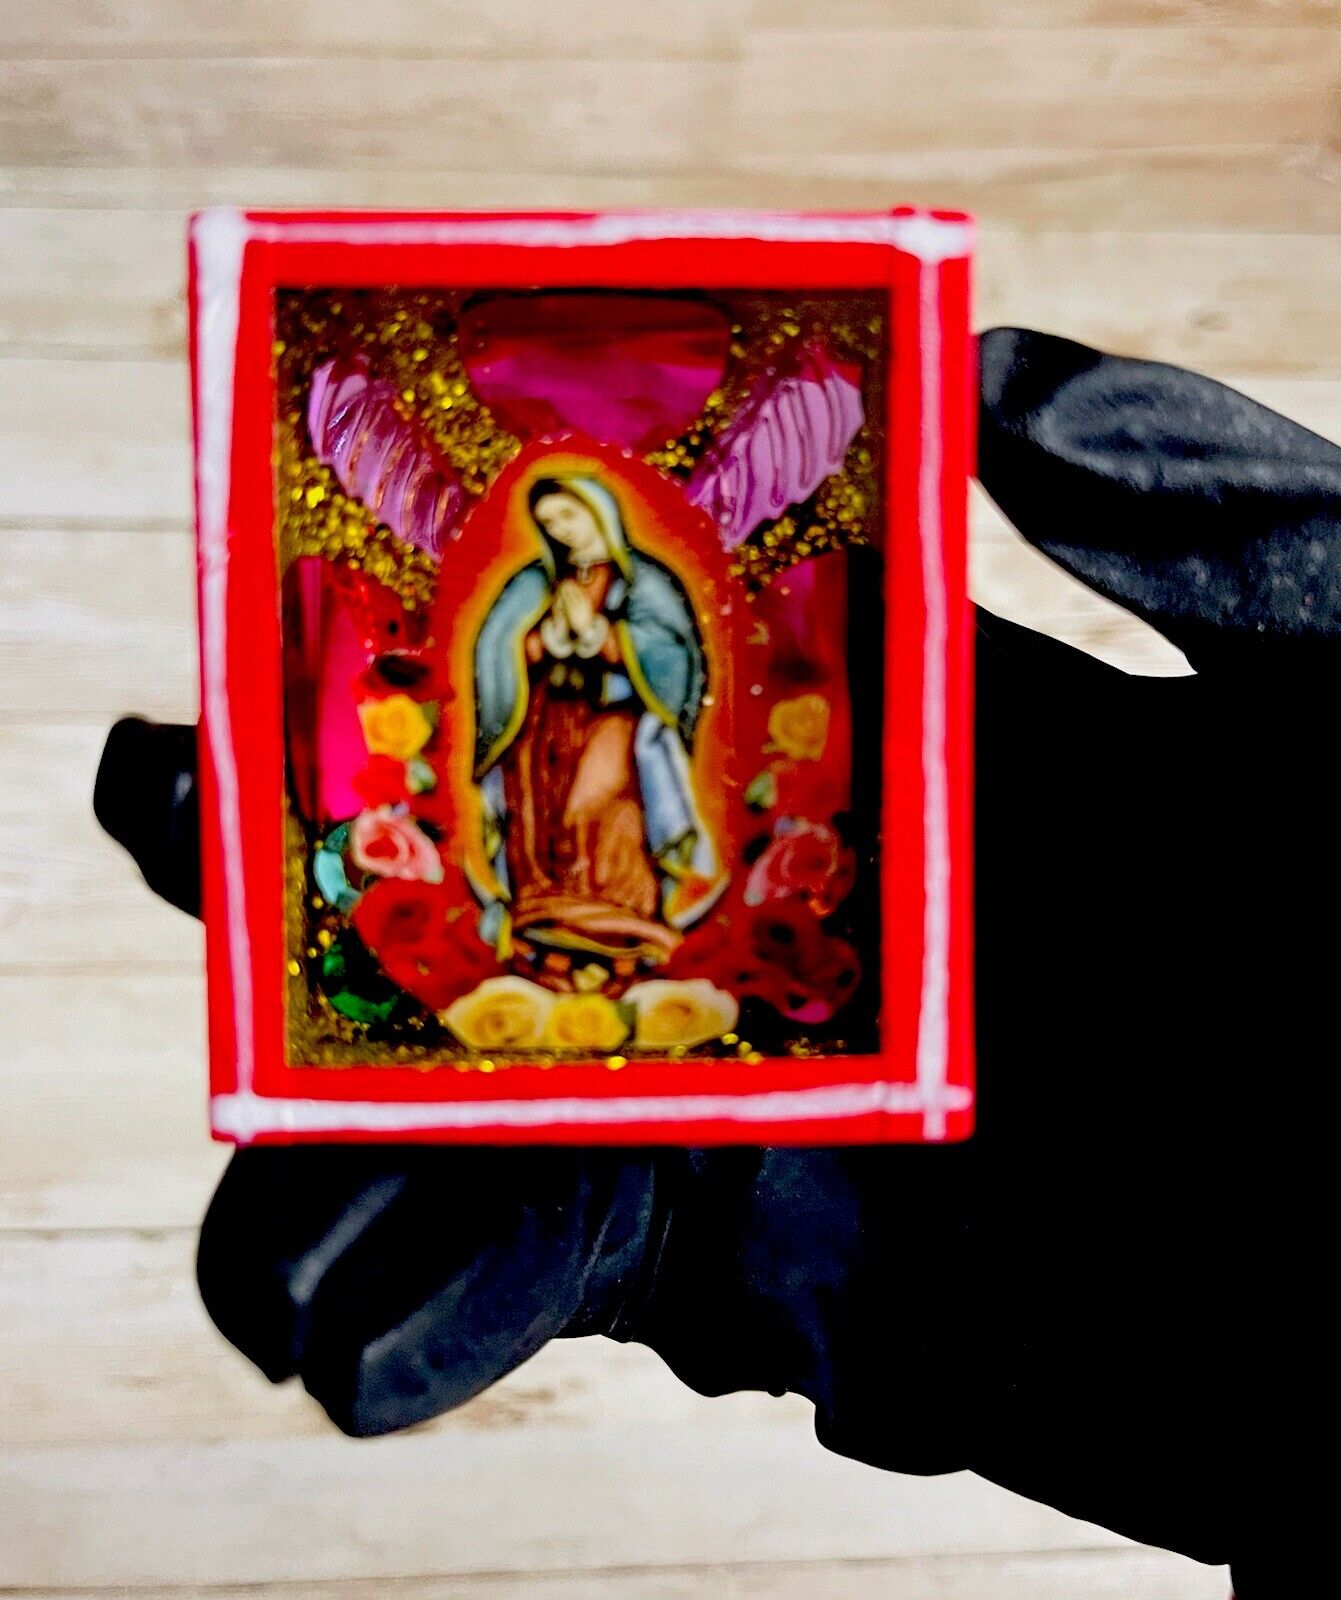 Nicho Mexicano Iman Virgen Maria Mexican Magnet Virgin Mary Shadow Box Nicho